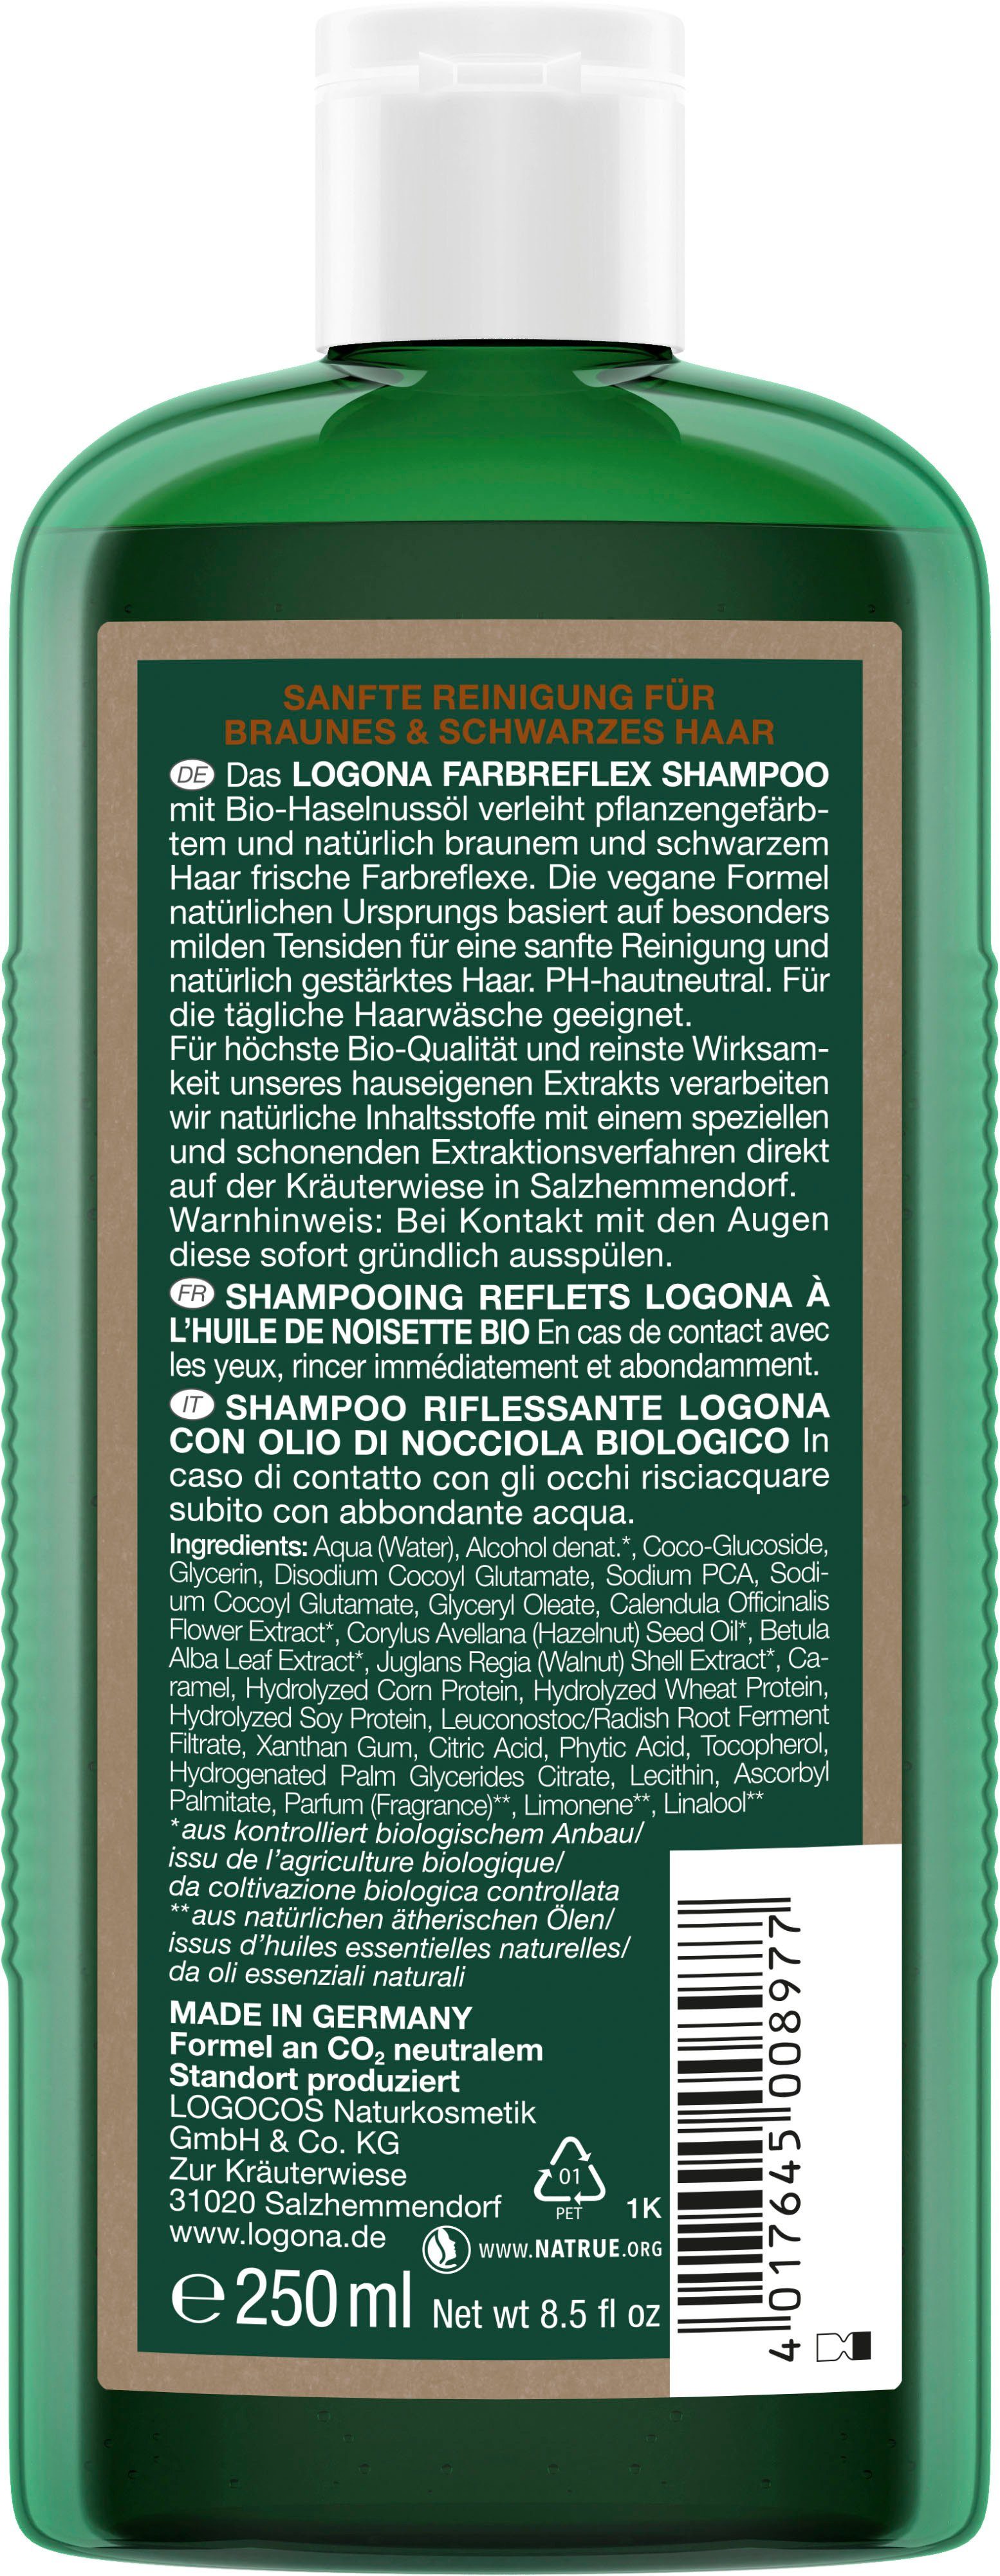 Bio-Haselnuss LOGONA Farbreflex Haarshampoo Logona Braun-Schwarz Shampoo